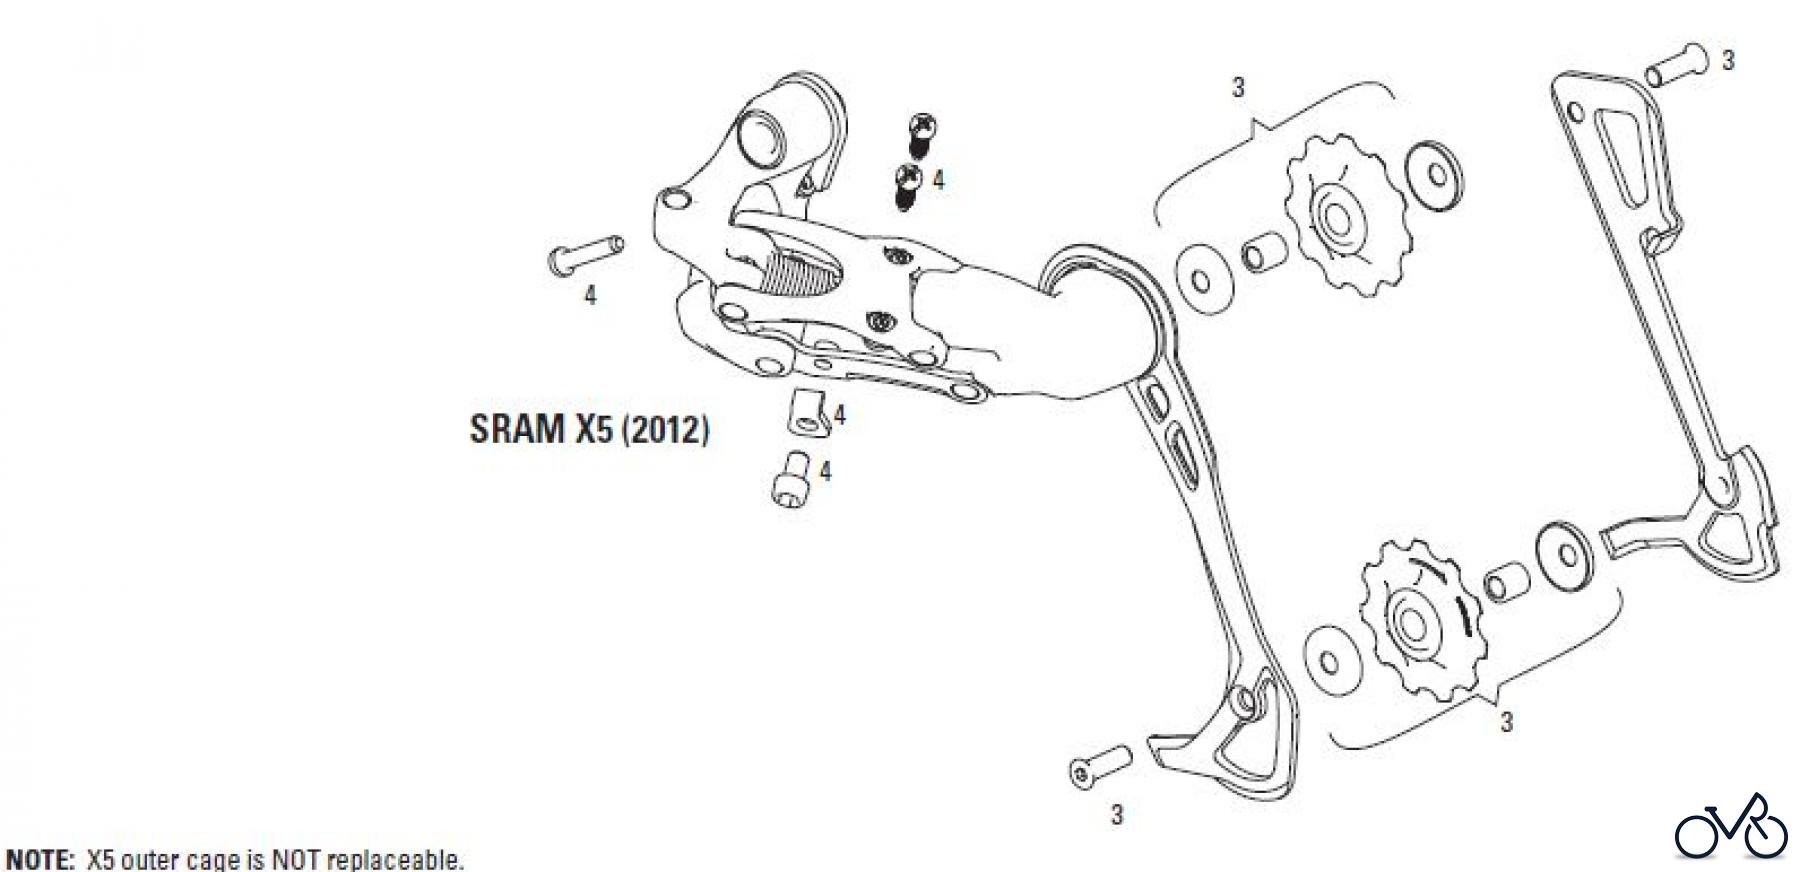  Sram Sram SRAM X5 (2012) - REAR DERAILLEUR 2x10 / 3x10